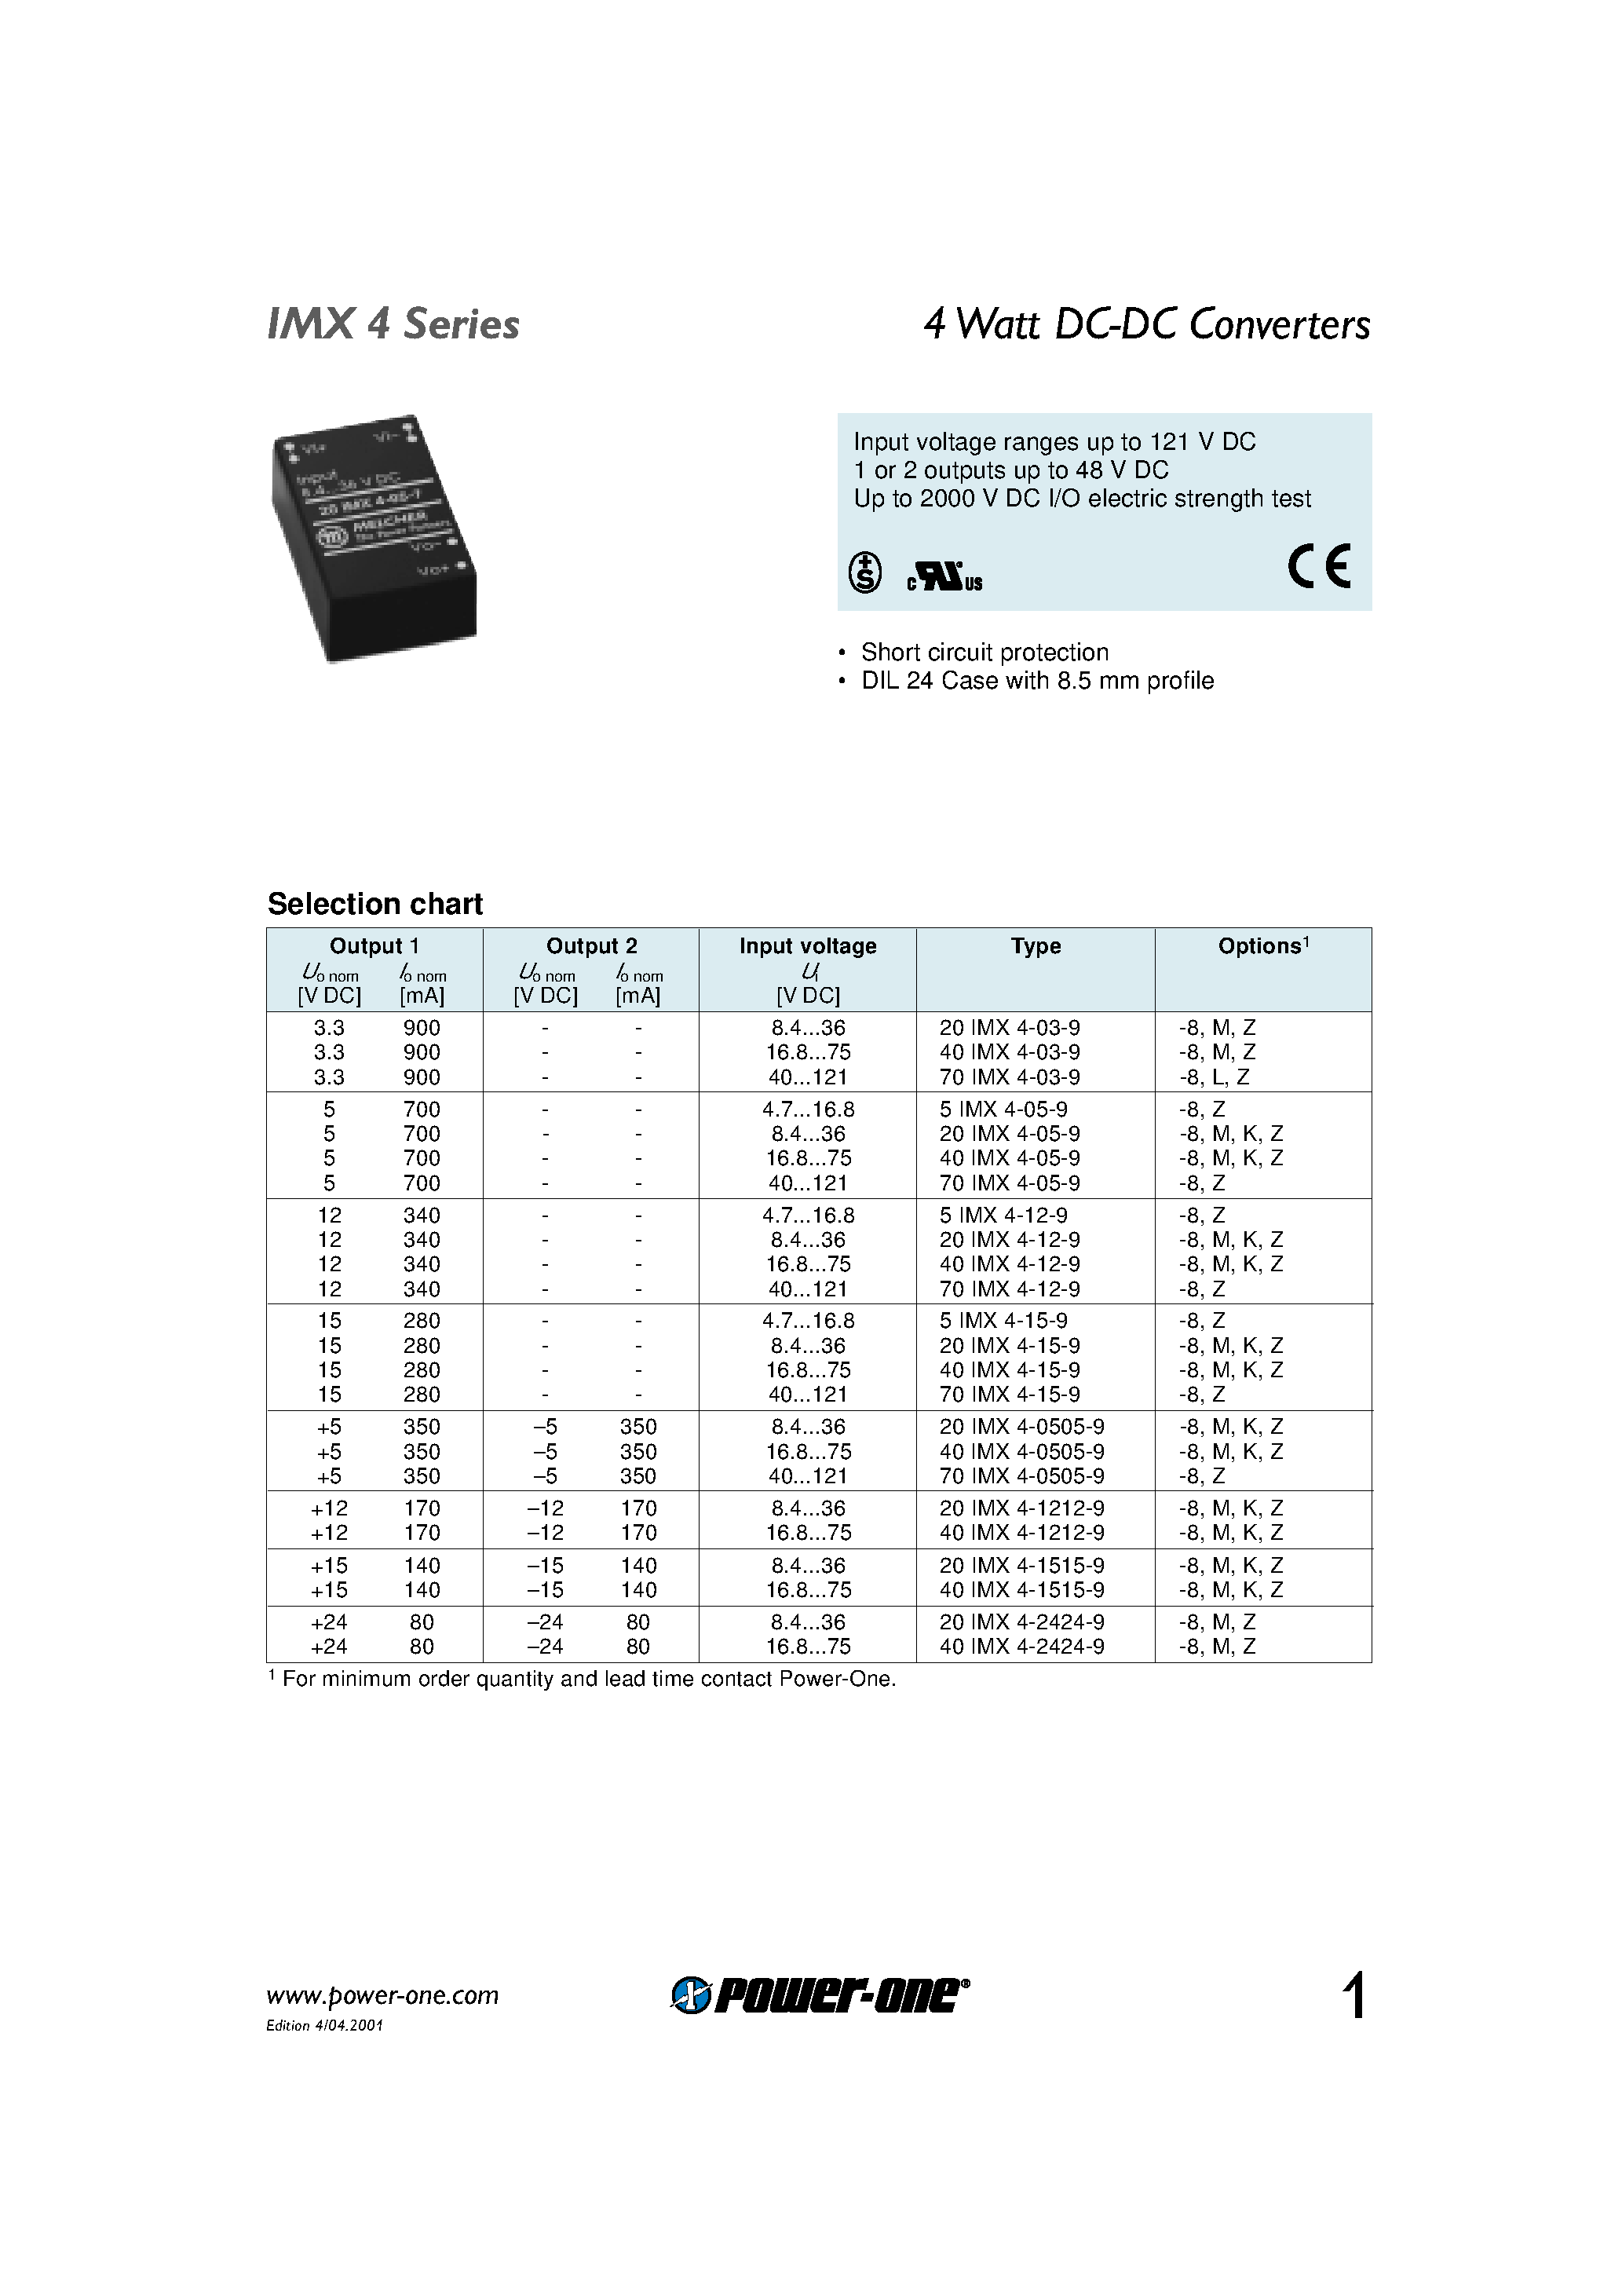 Datasheet 40IMX4-1212-9 - 4 Watt DC-DC Converters page 1